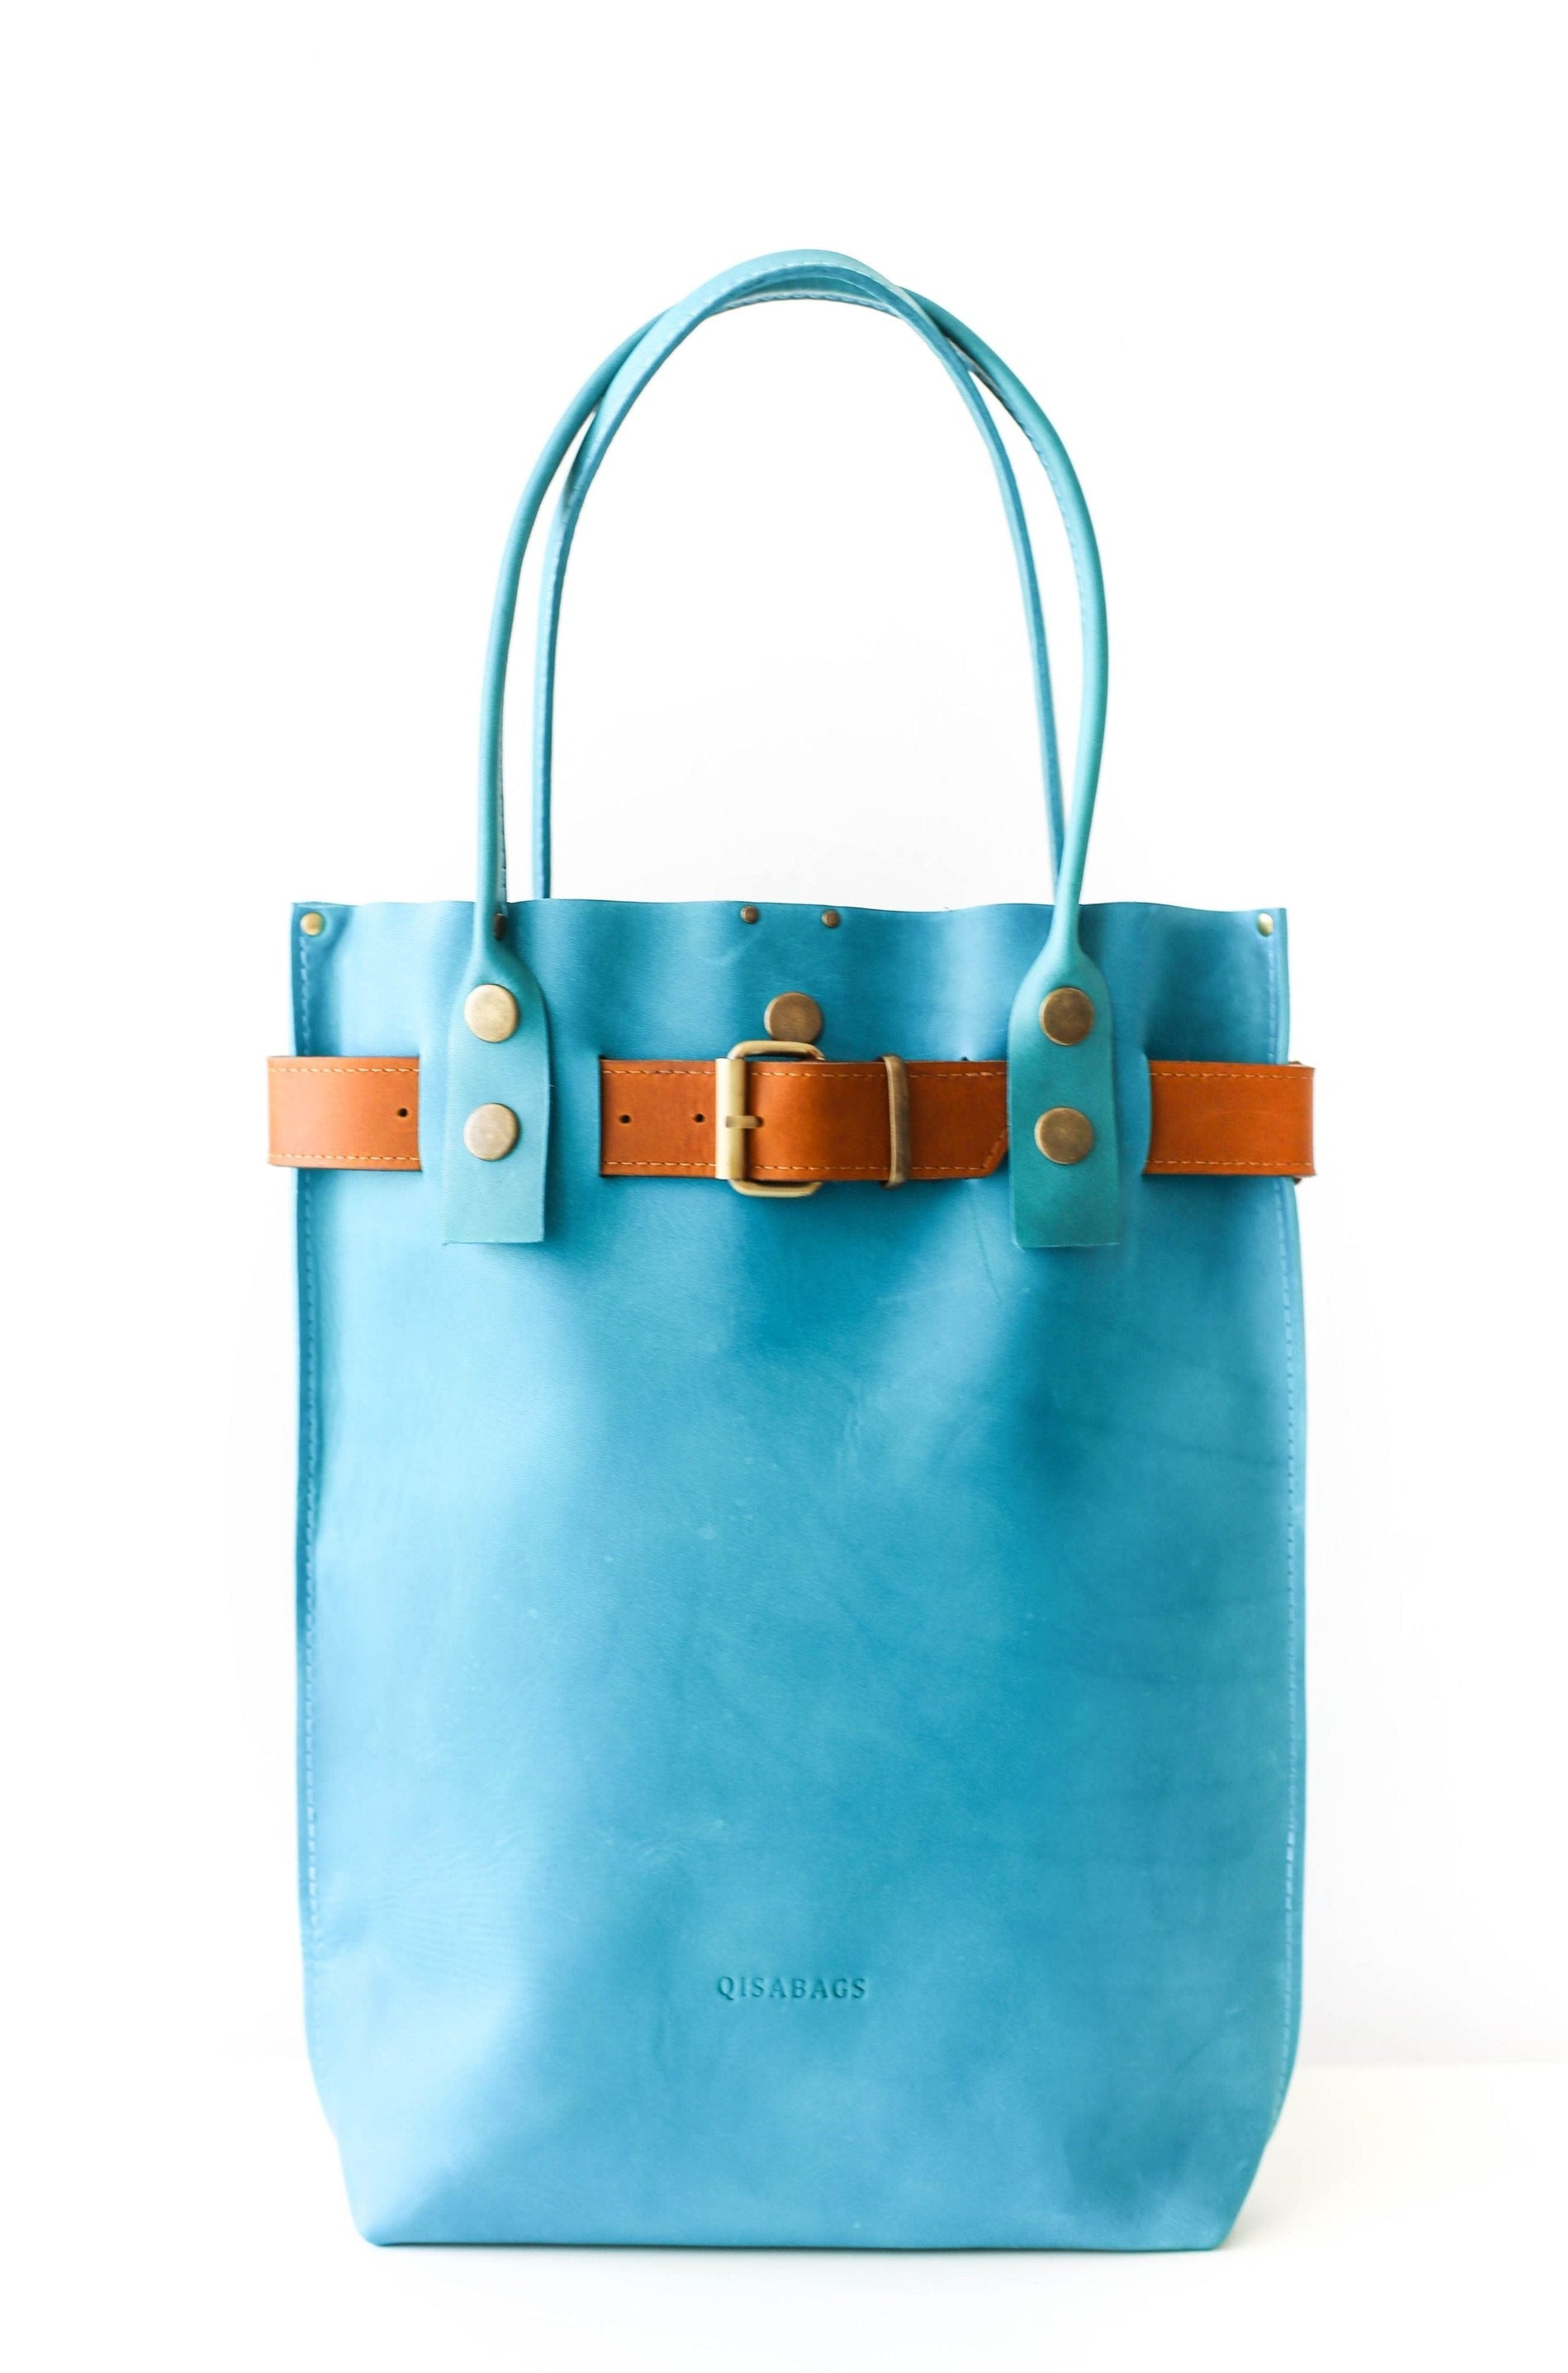 Designer Leather Handbag